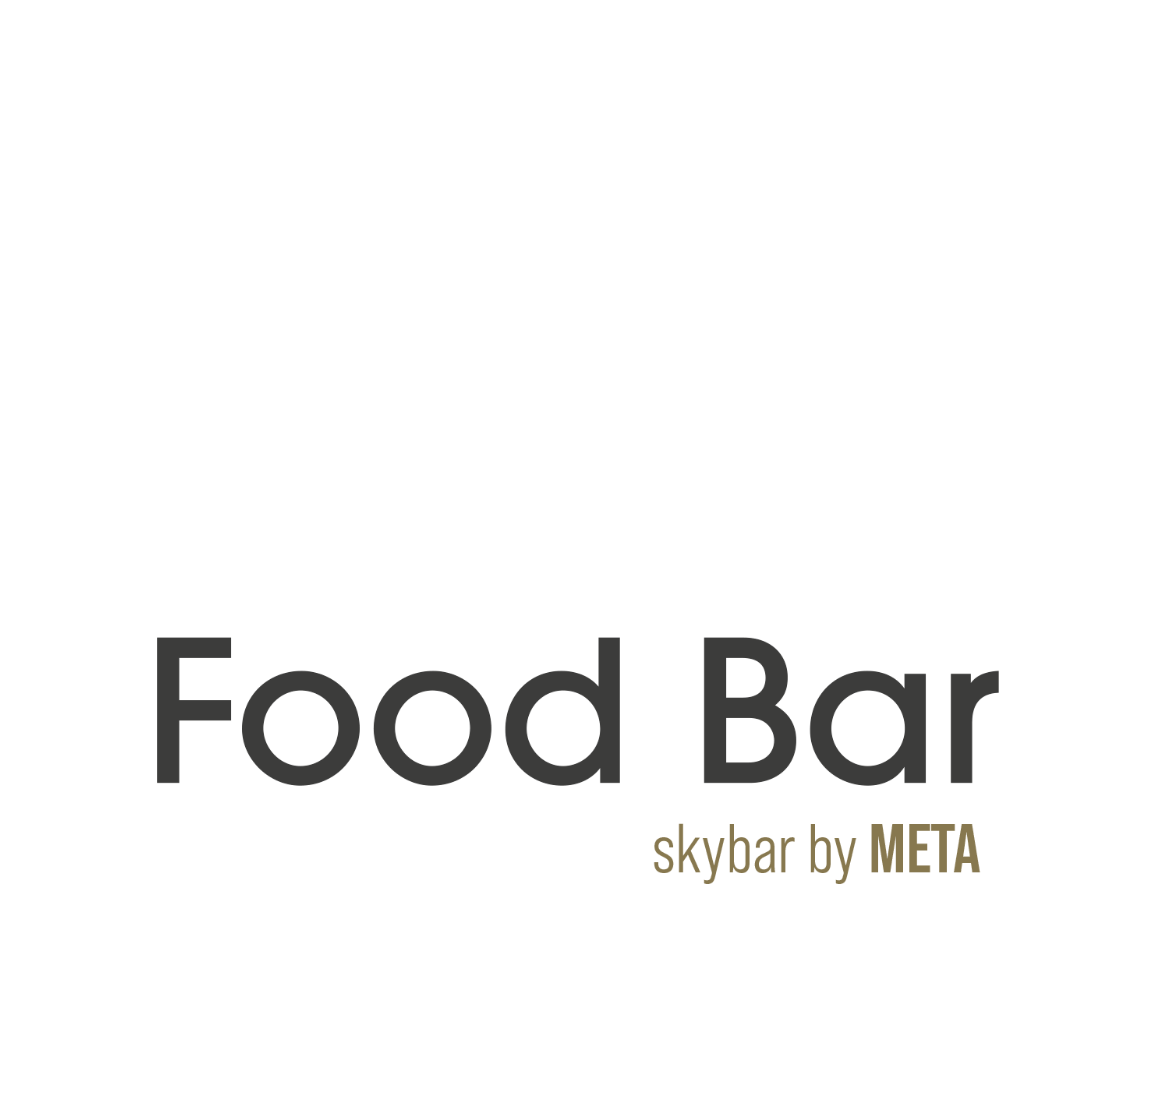 Food Bar by Meta